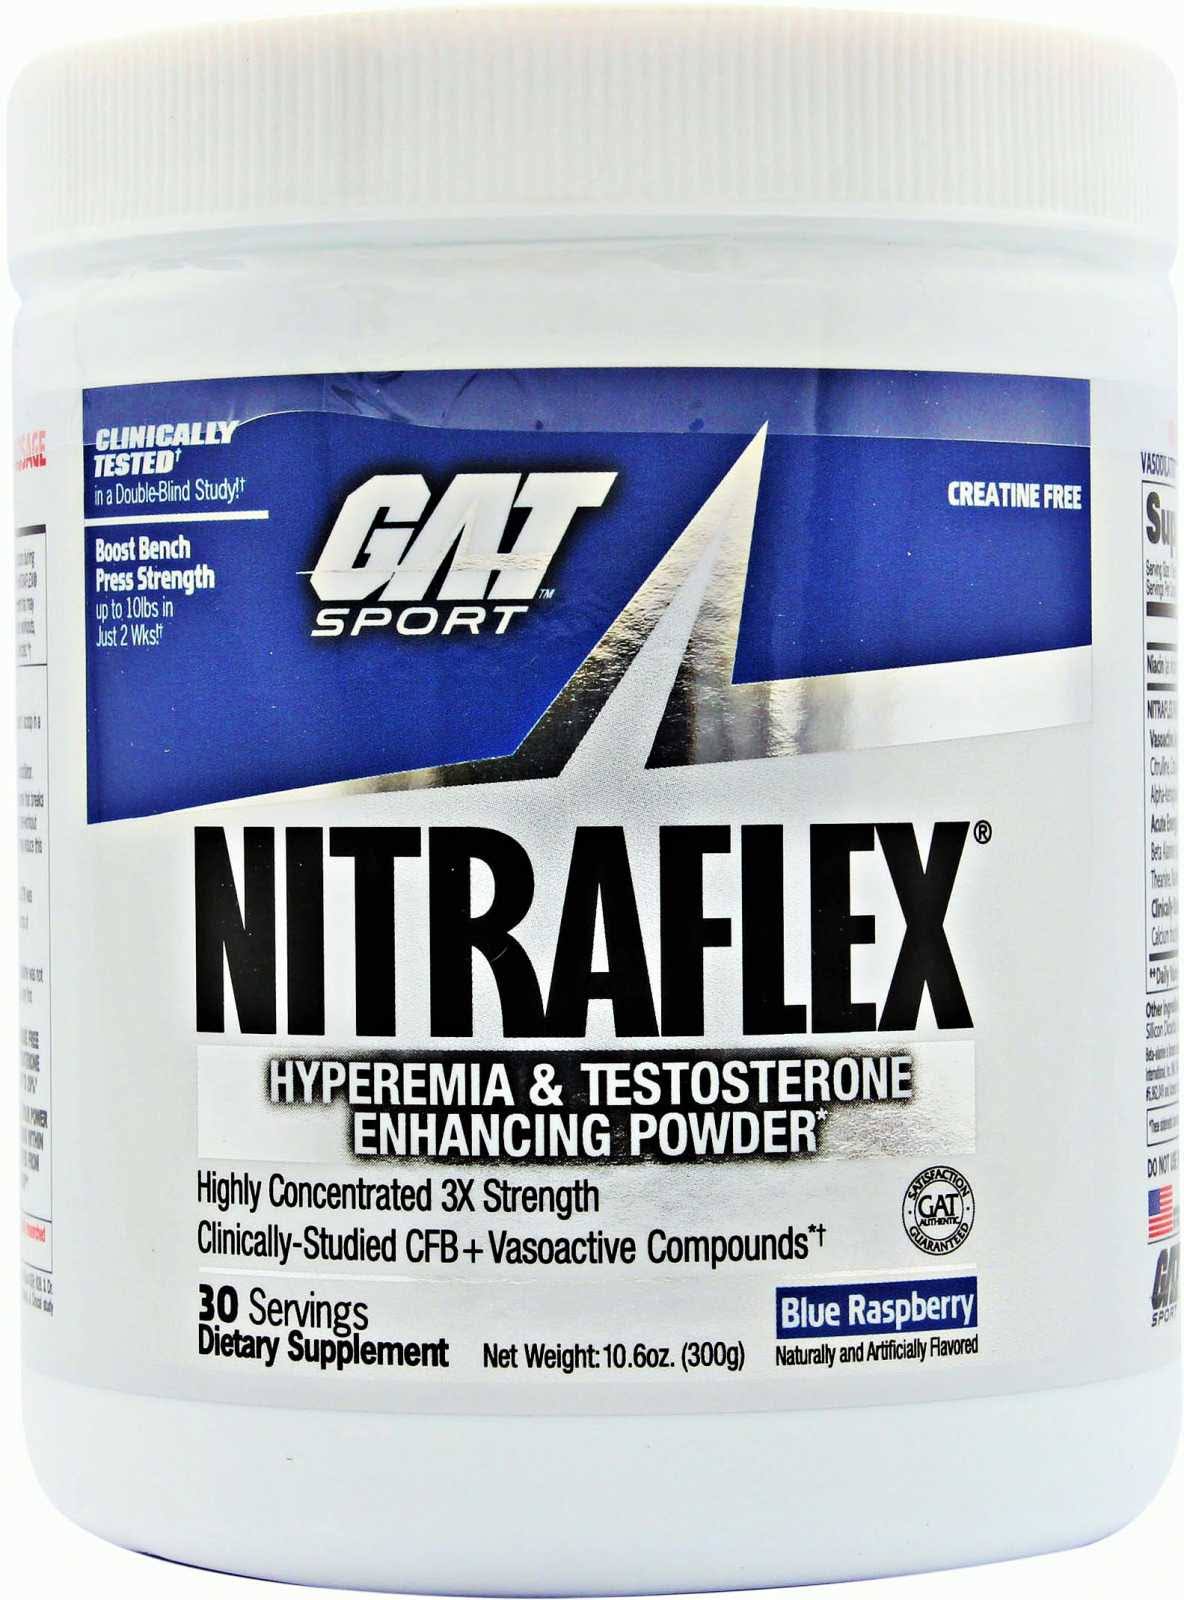 GAT Clinically Tested Nitraflex Testosterone Enhancing Pre Workout - Watermelon, 300g